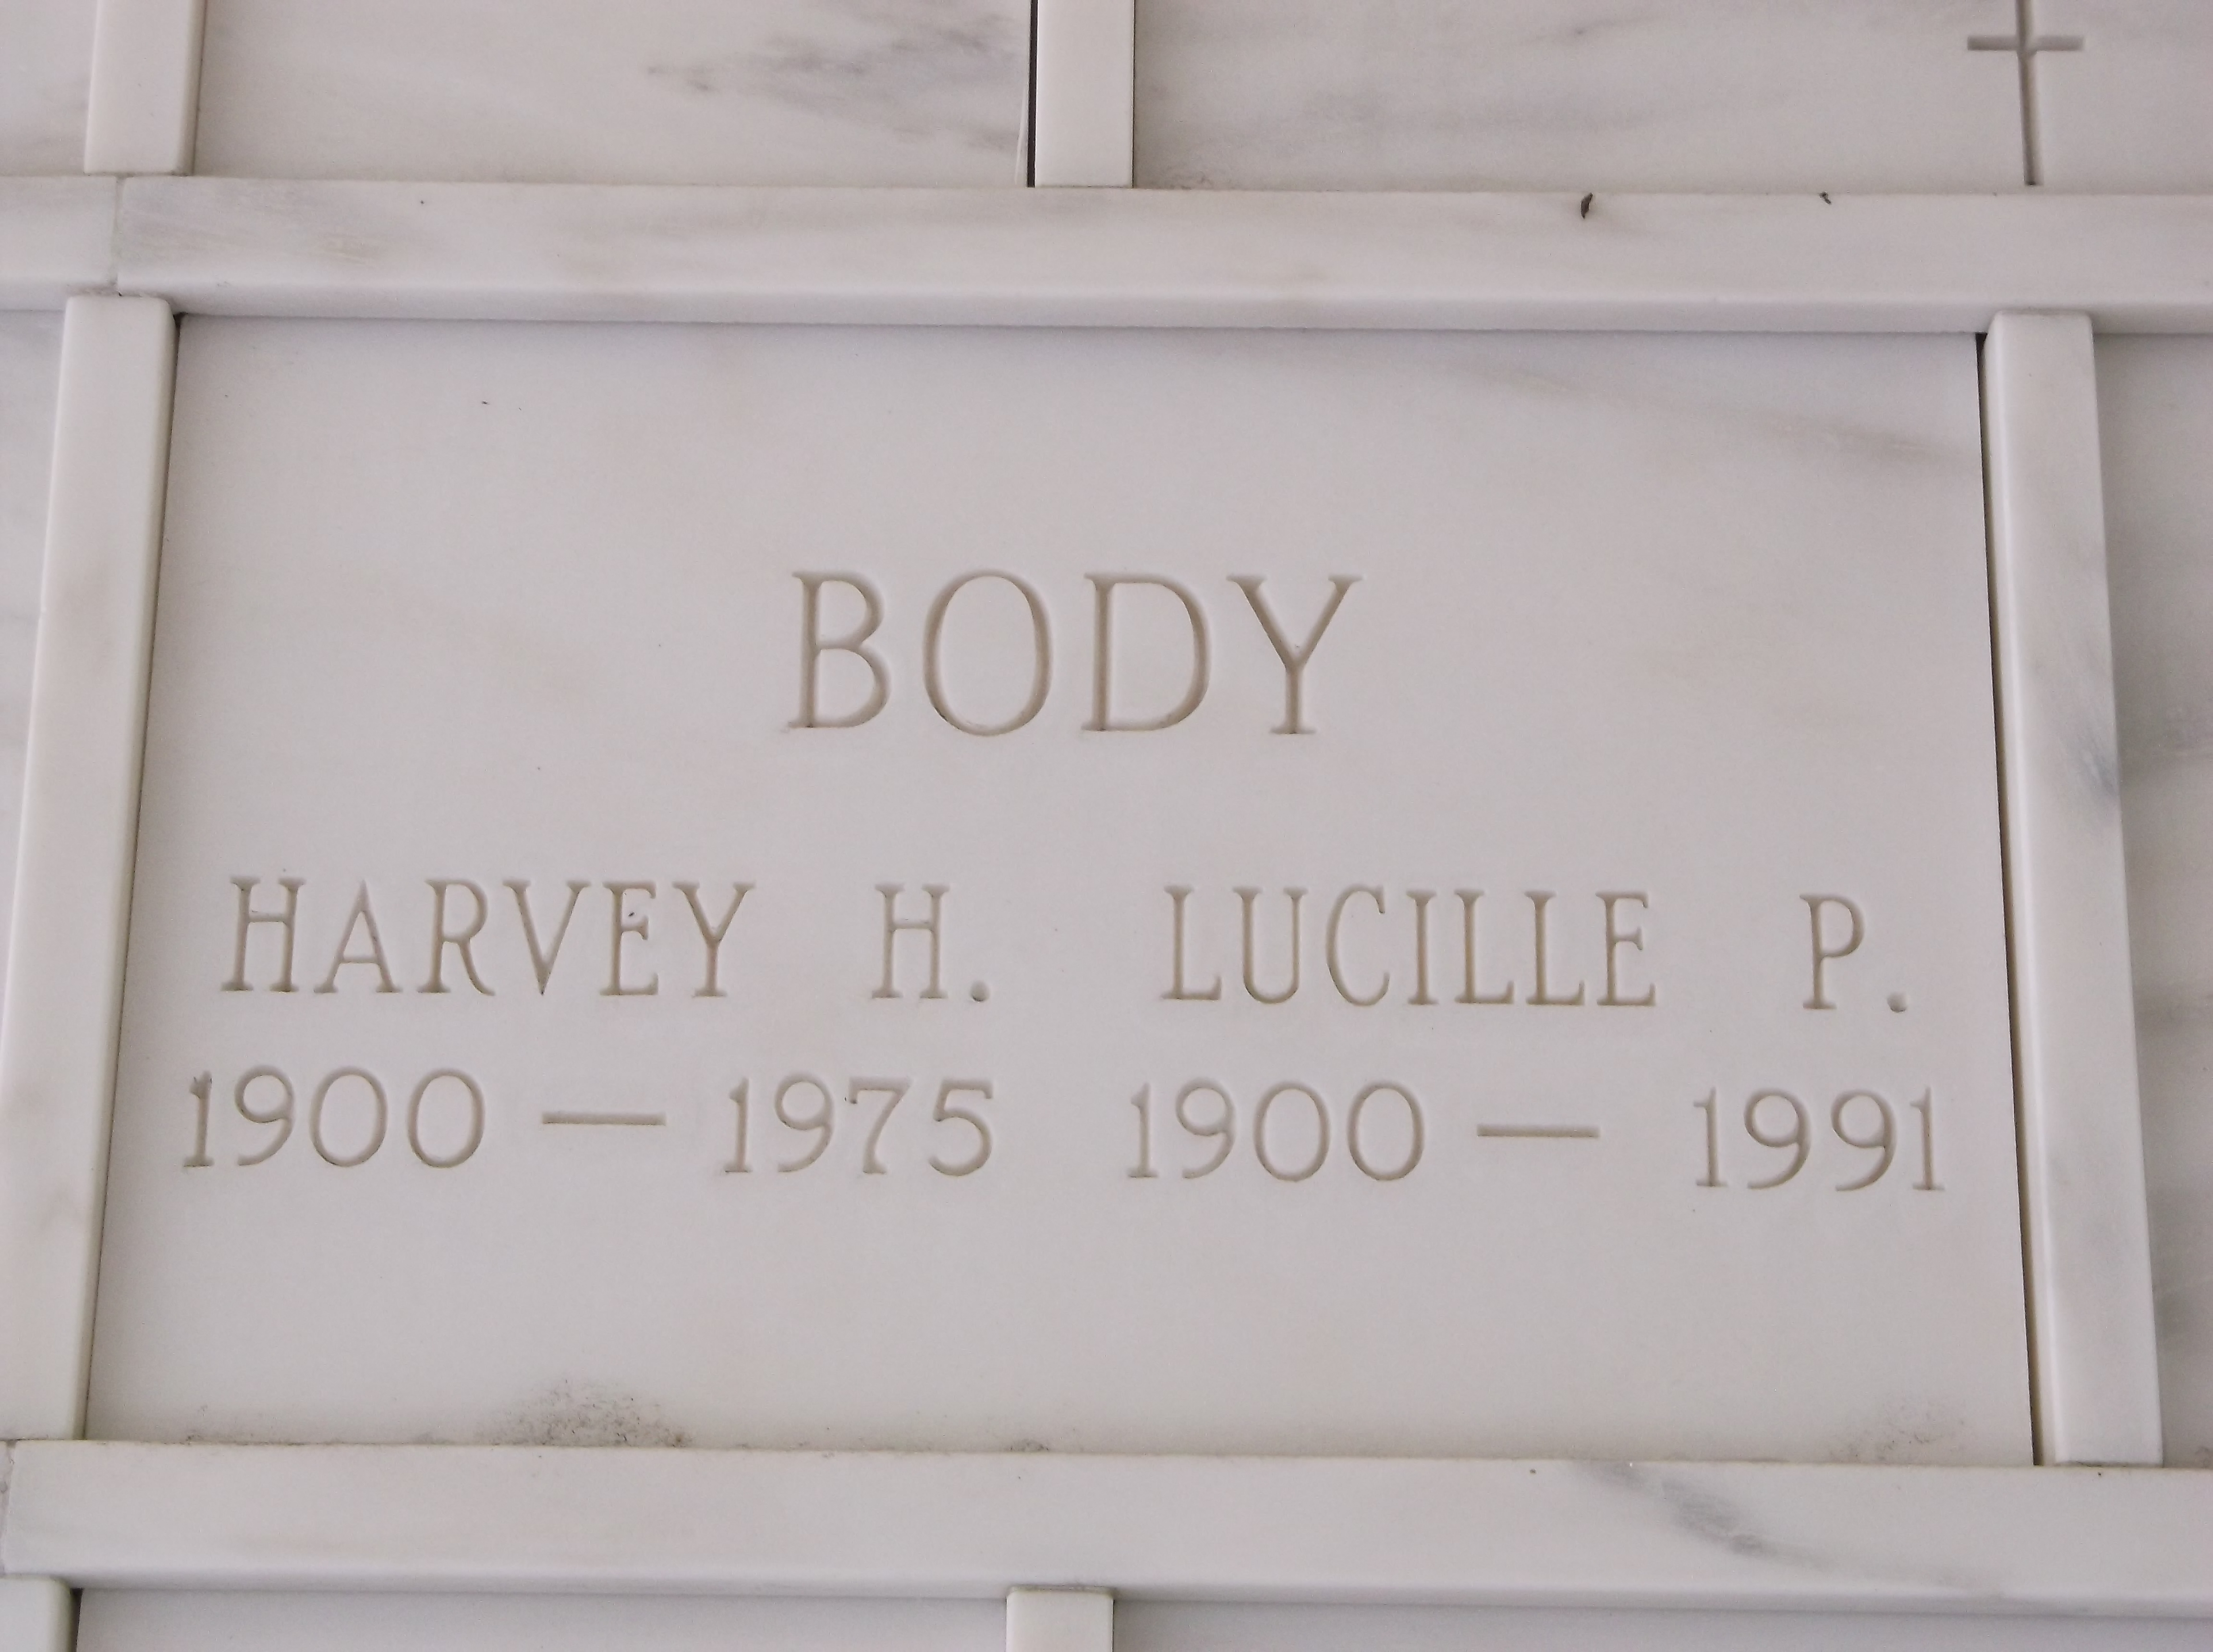 Lucille P Body